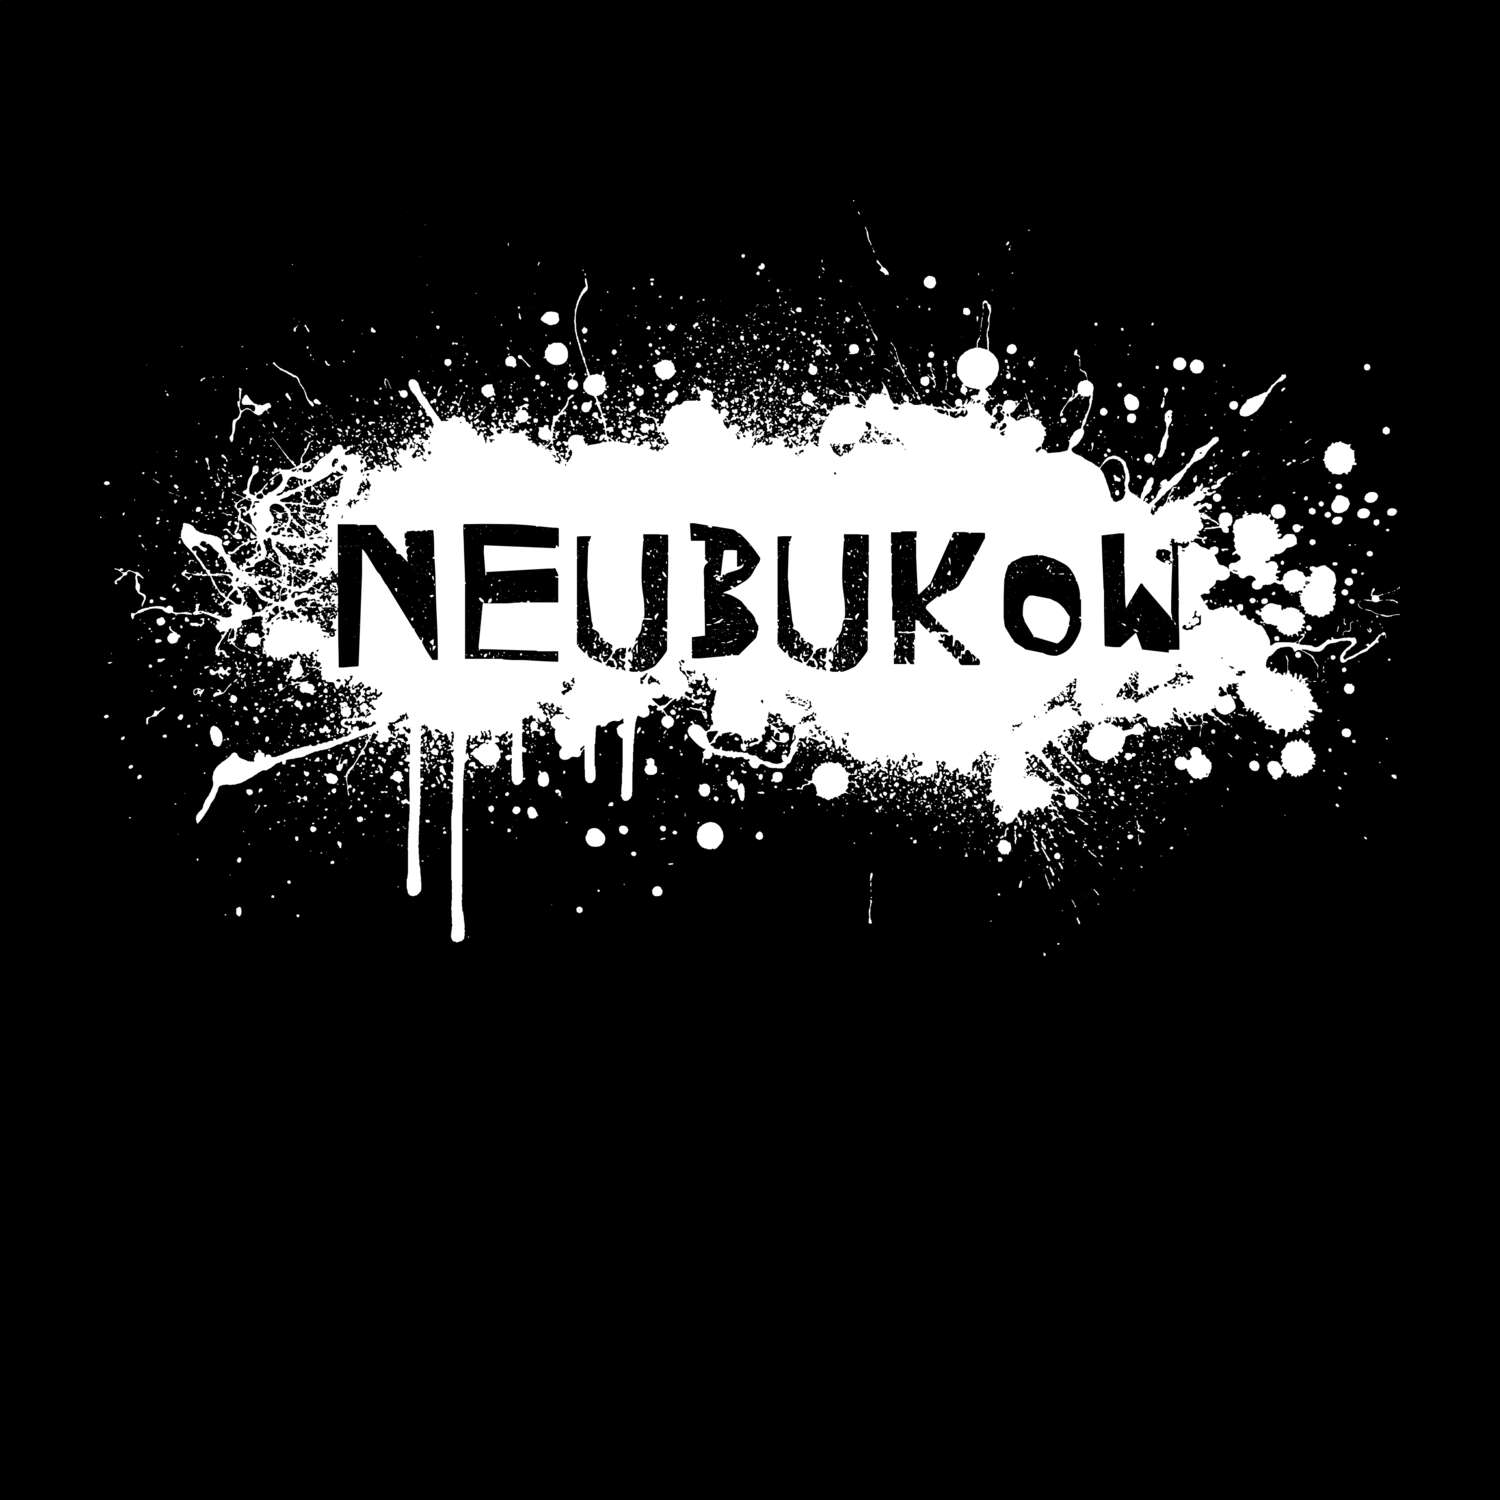 Neubukow T-Shirt »Paint Splash Punk«